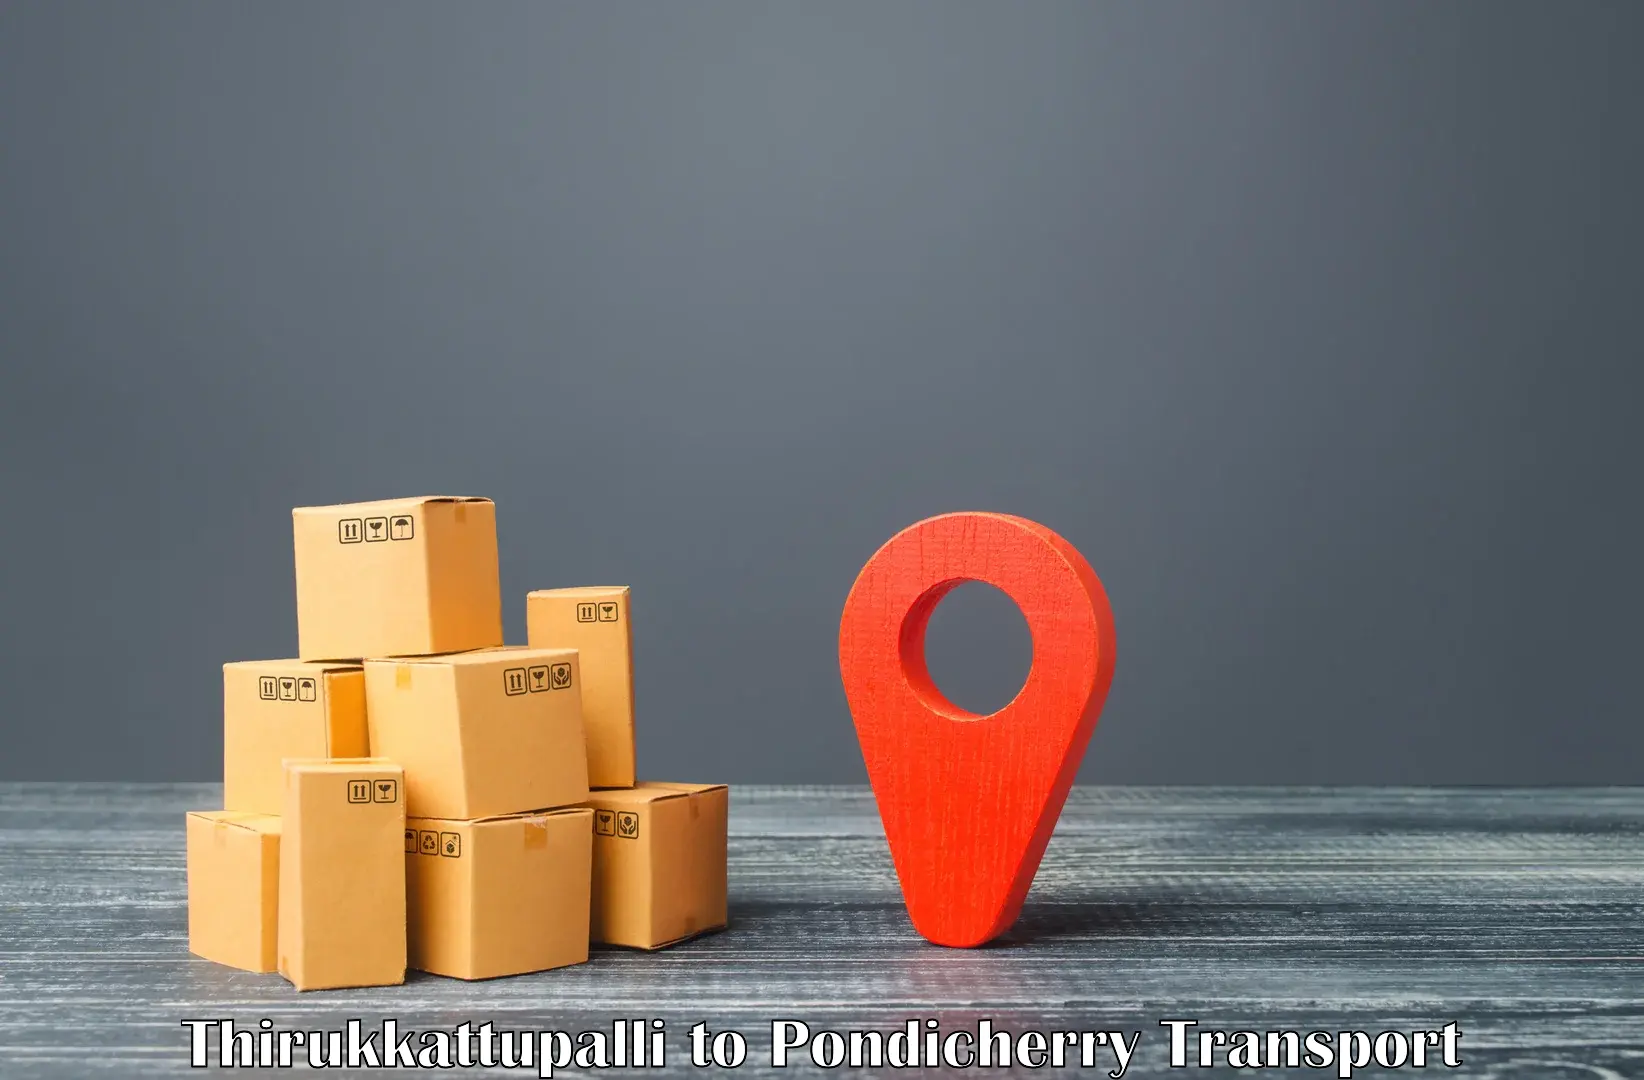 Package delivery services in Thirukkattupalli to Pondicherry